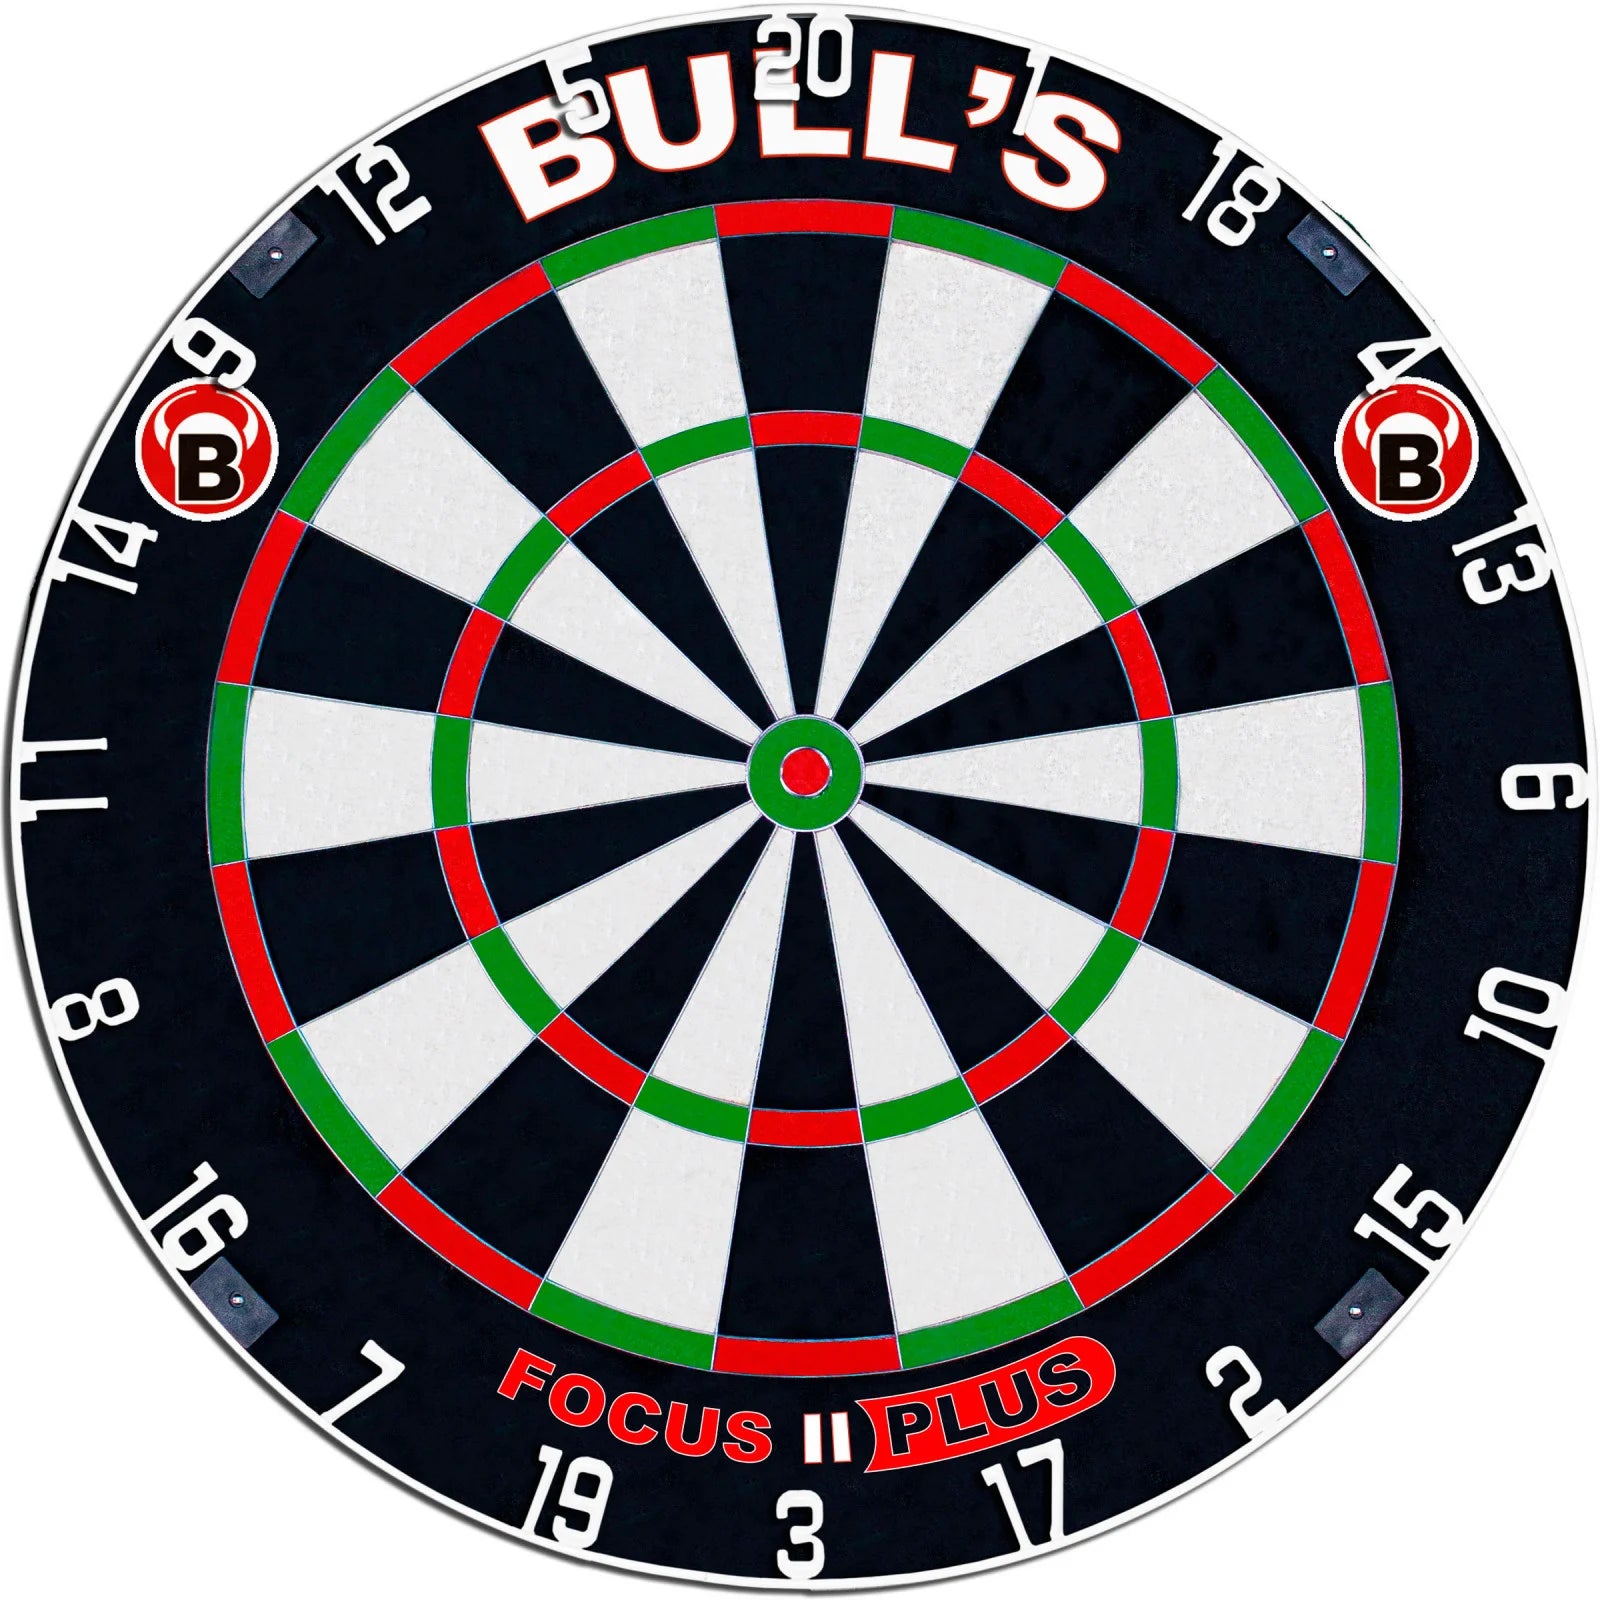 BULL'S Focus II Plus Steel Dart Board